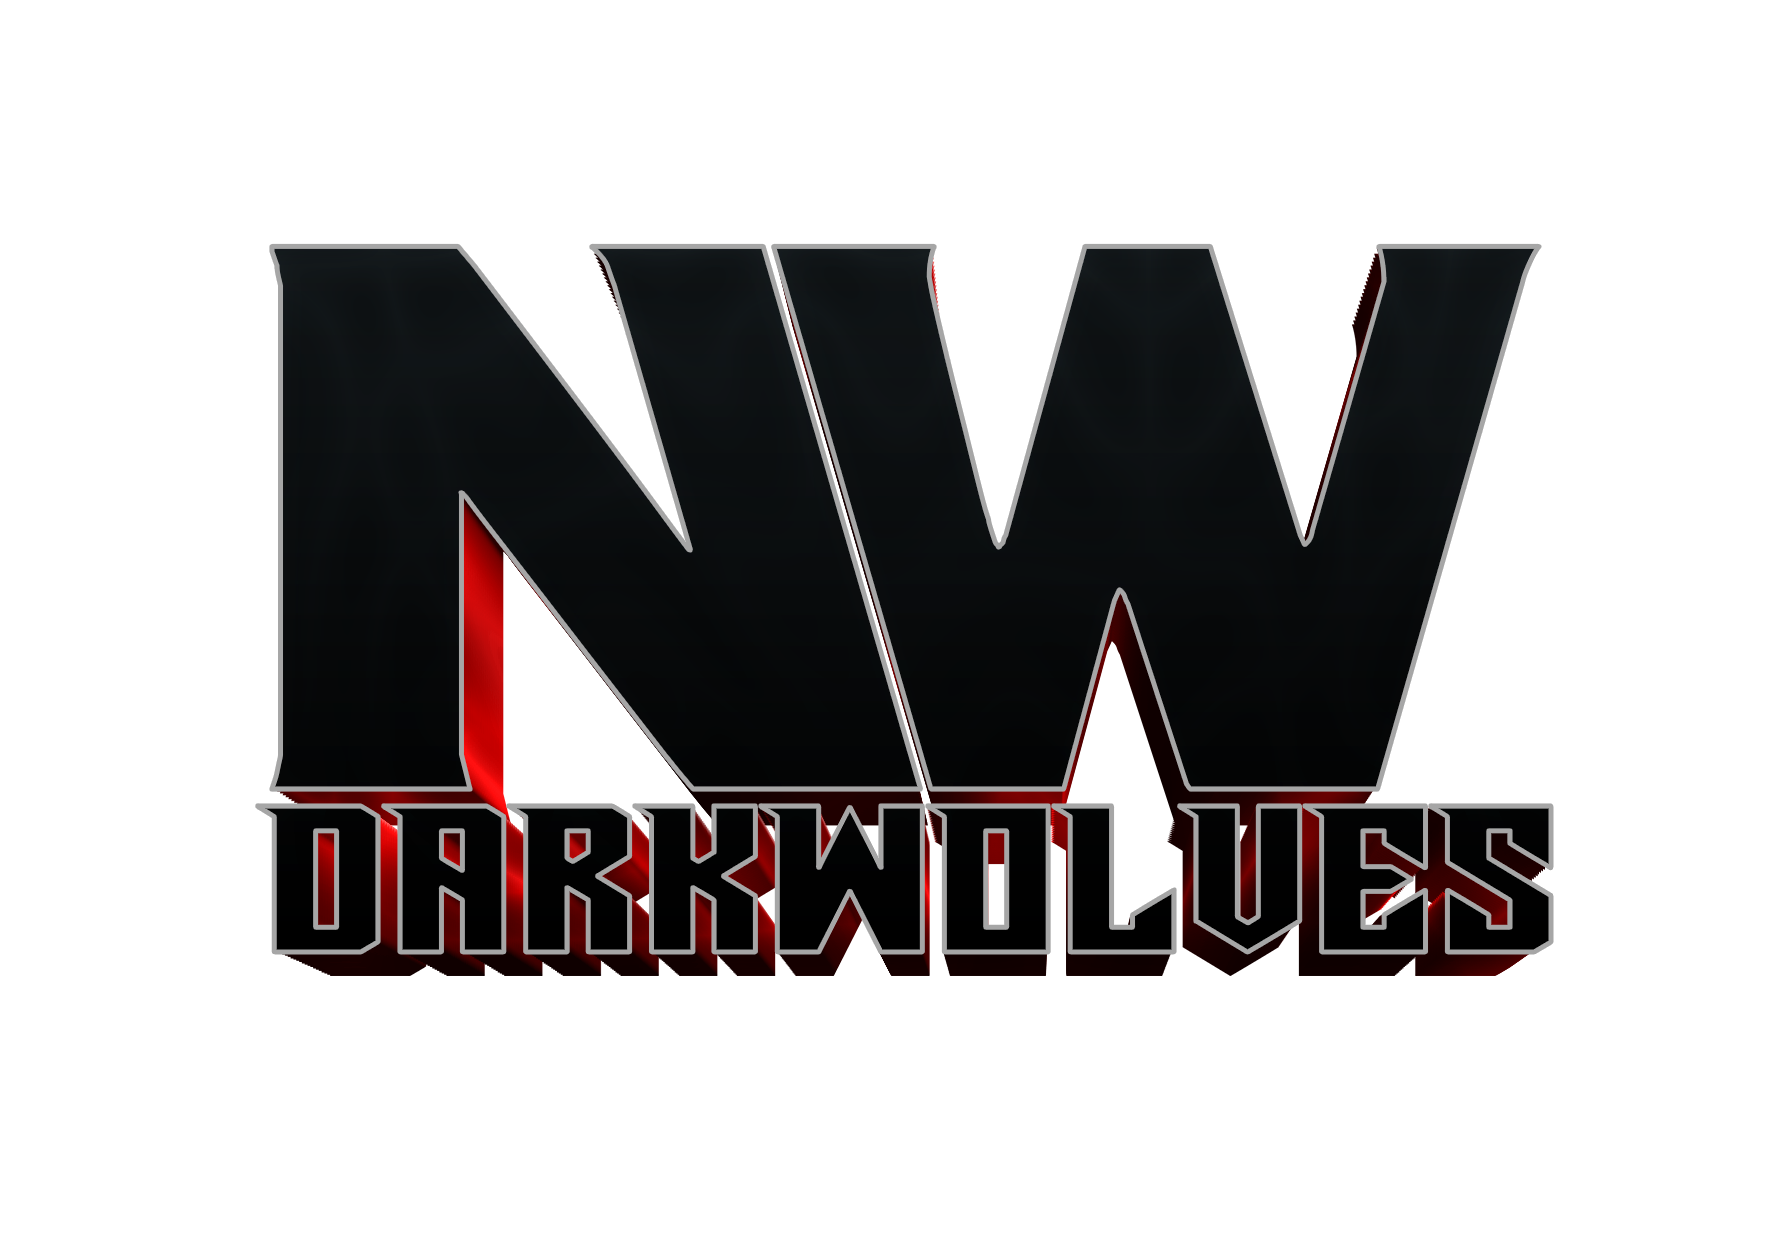 Team DarkWolves